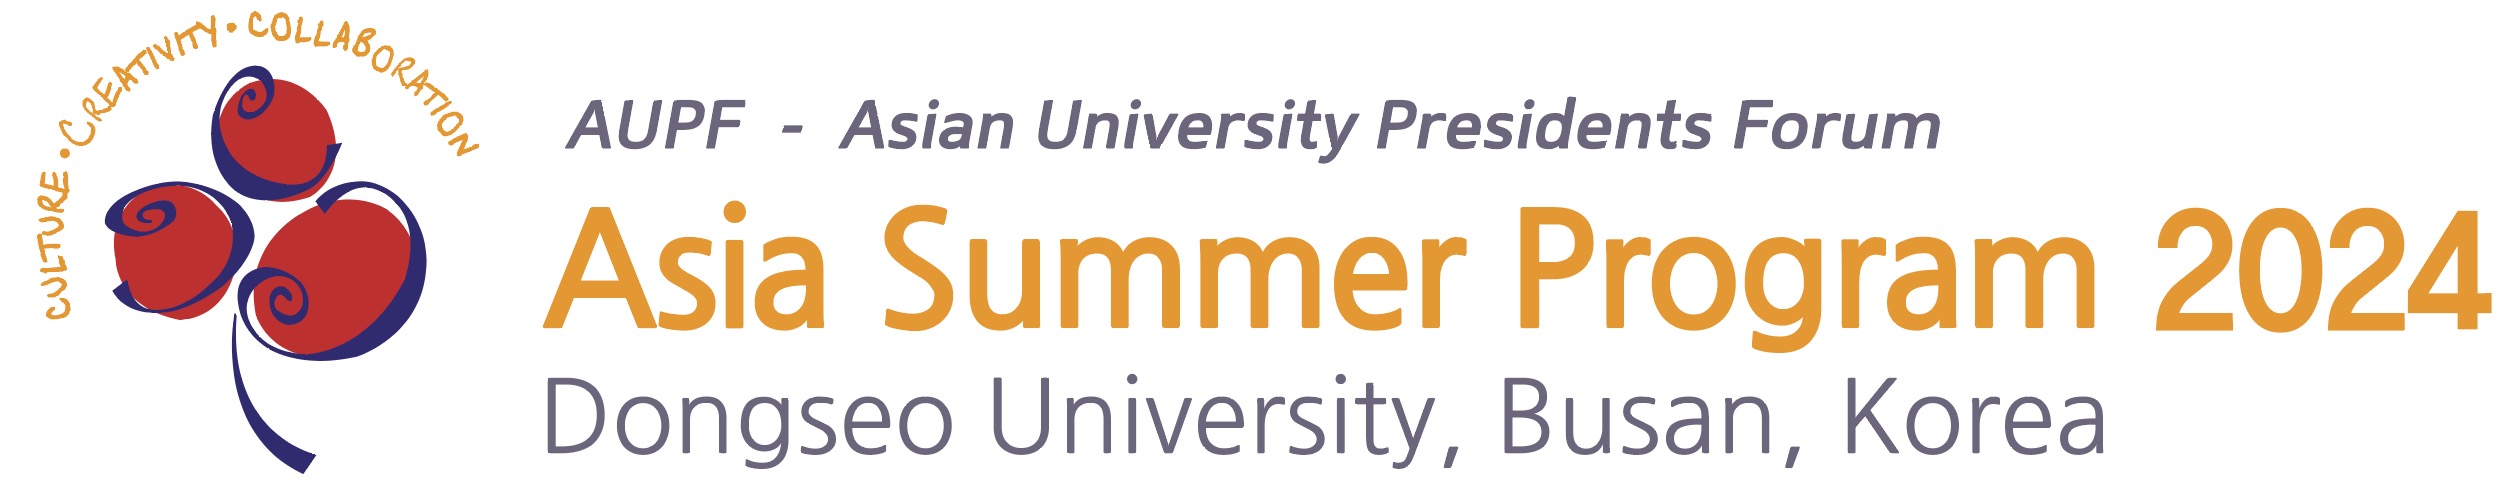 Asia Summer Program 2018 Dongseo University, Busan